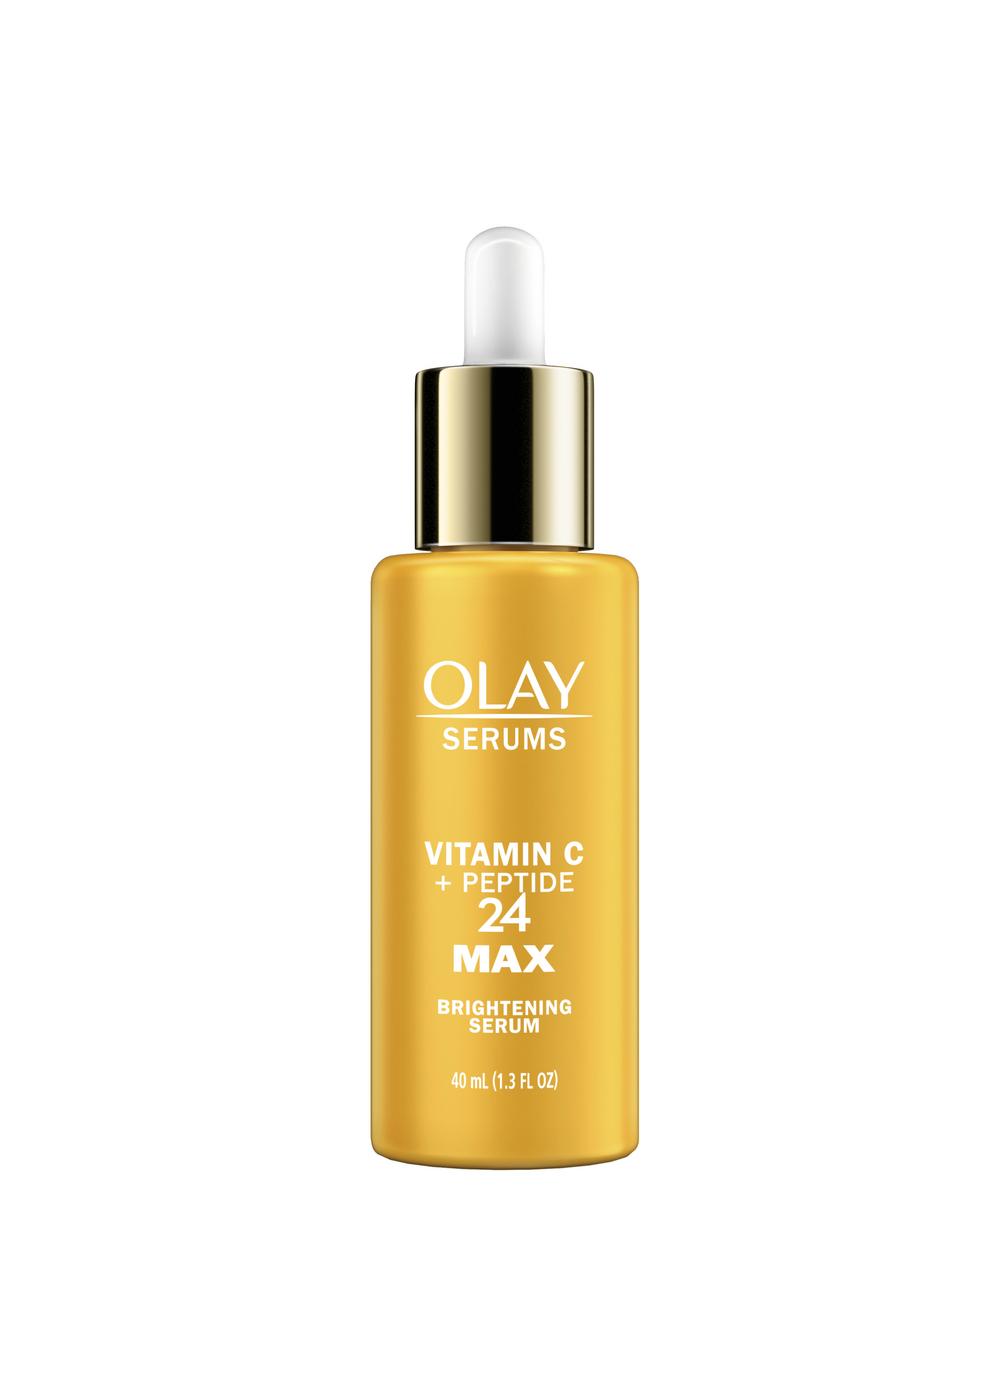 Olay Vitamin C + Peptide 24 Max Brightening Serum; image 3 of 3